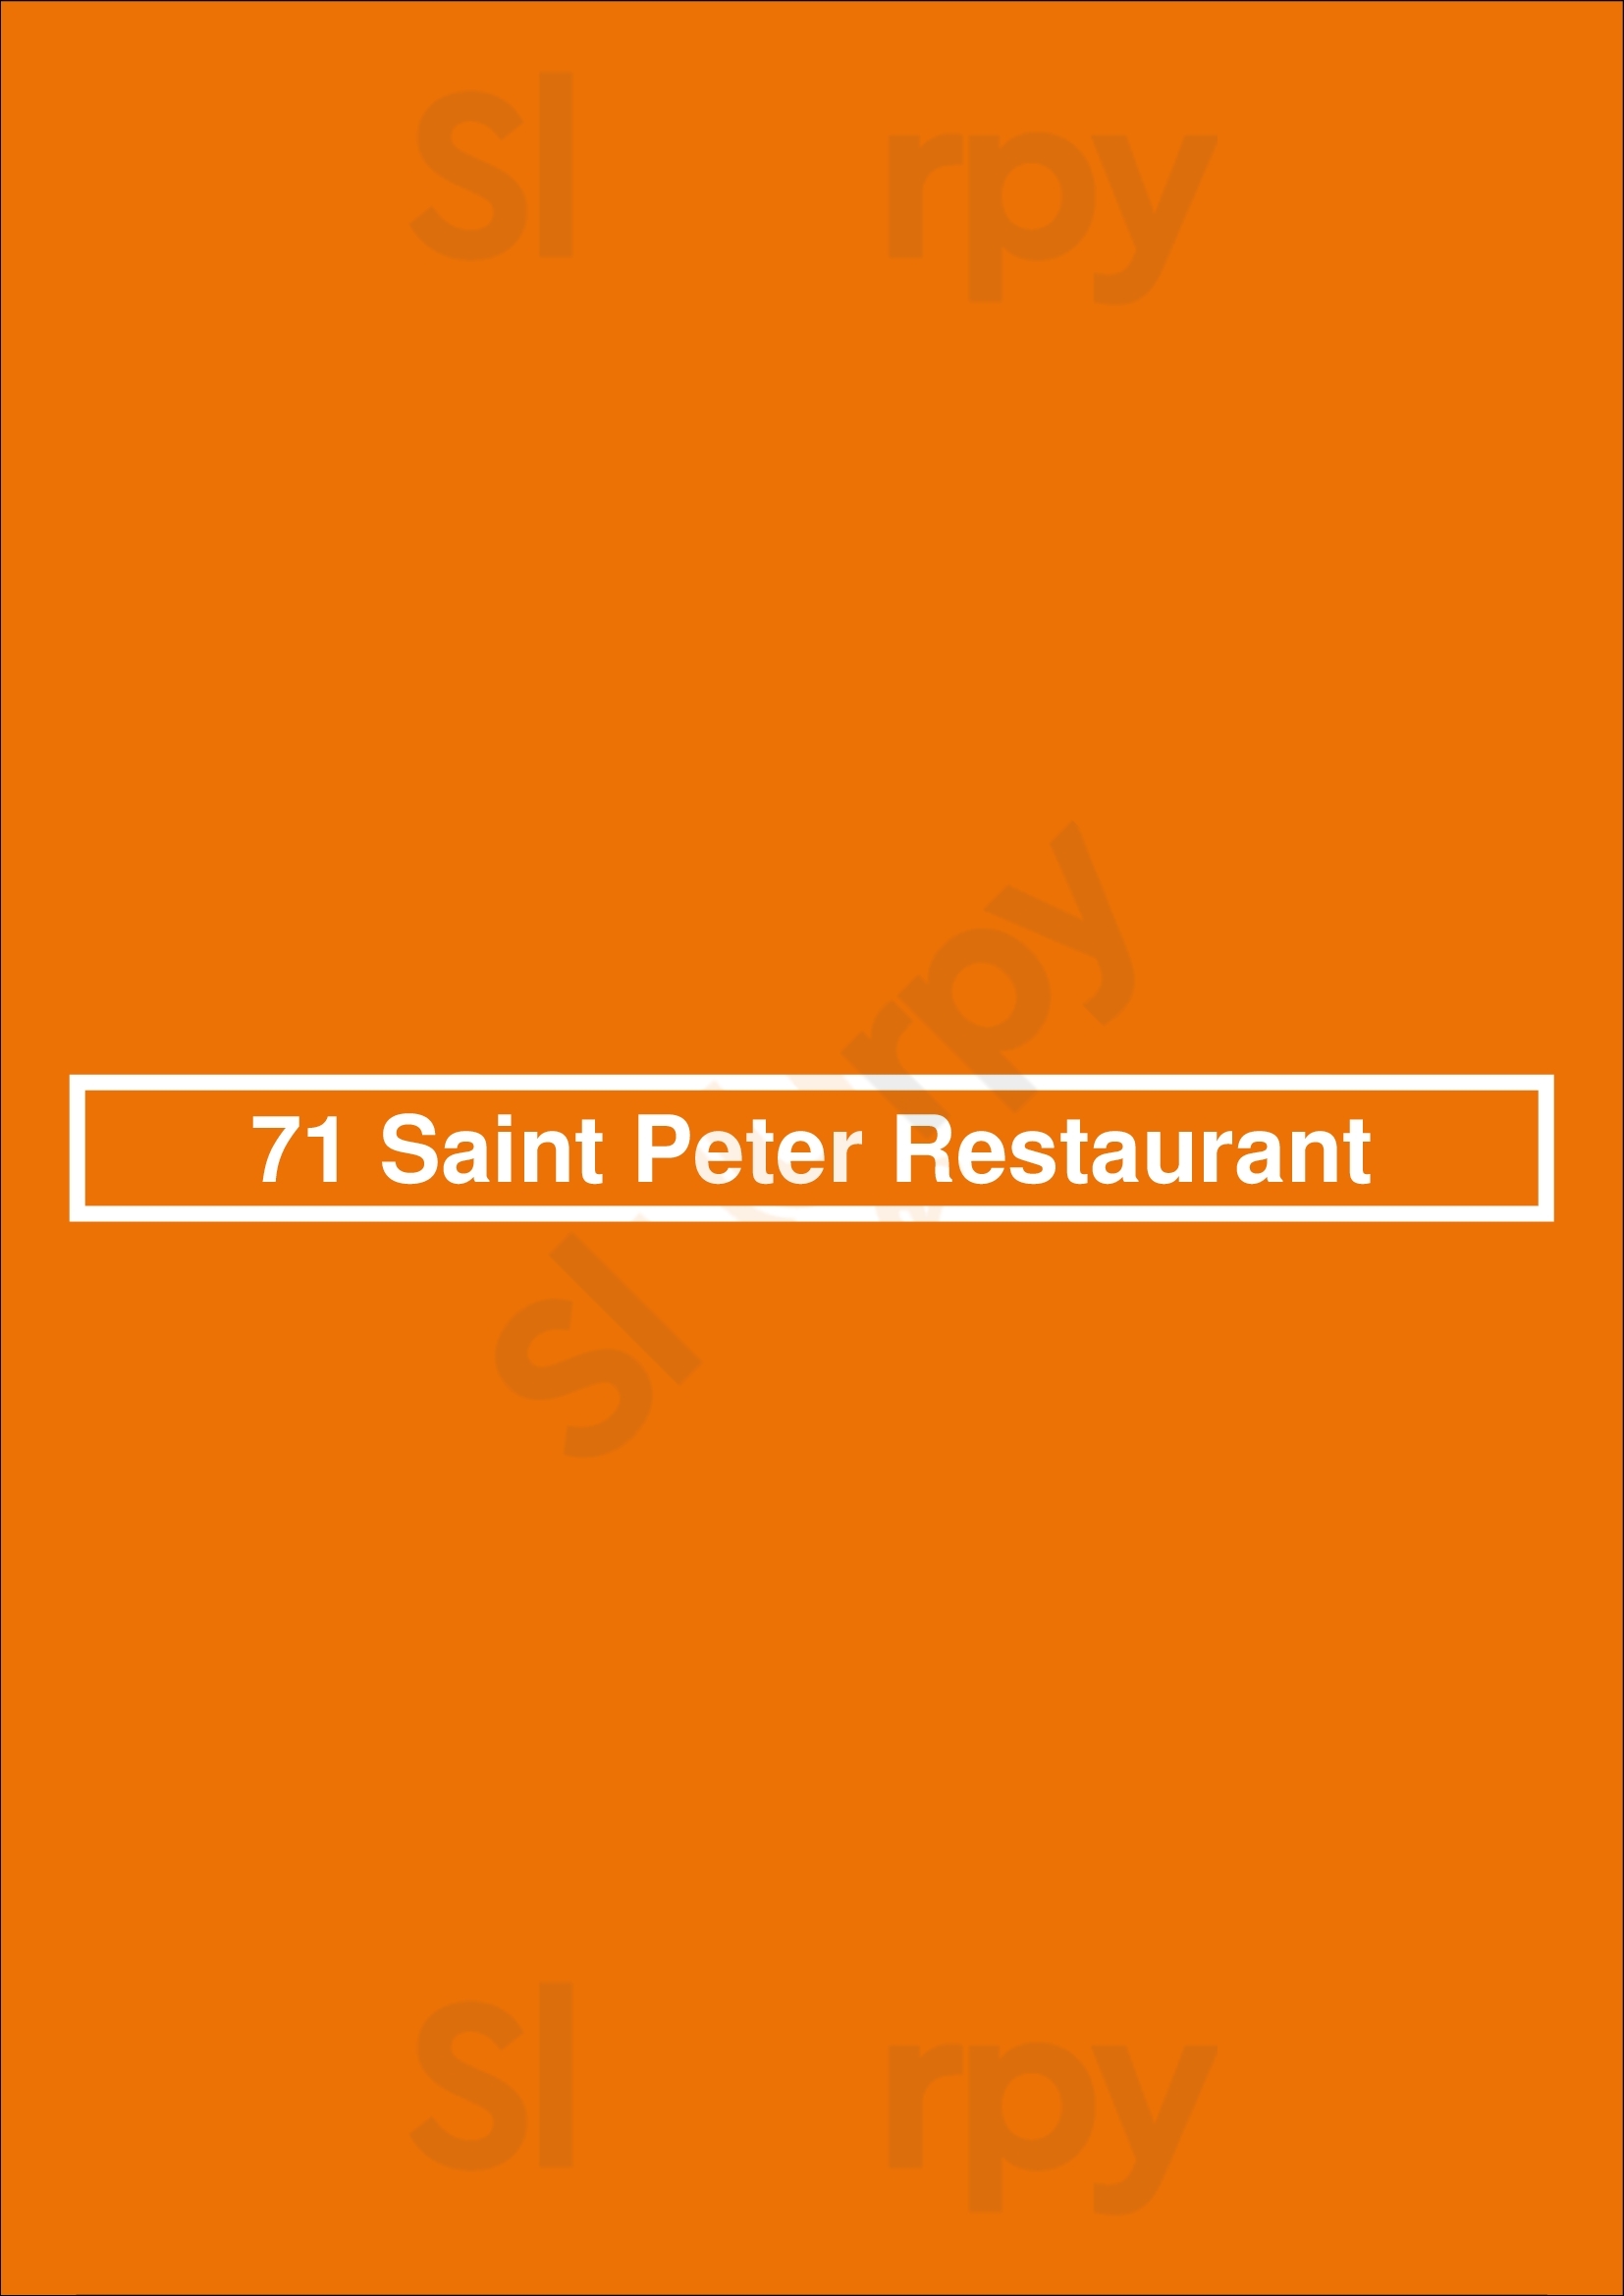 71 Saint Peter Restaurant San Jose Menu - 1